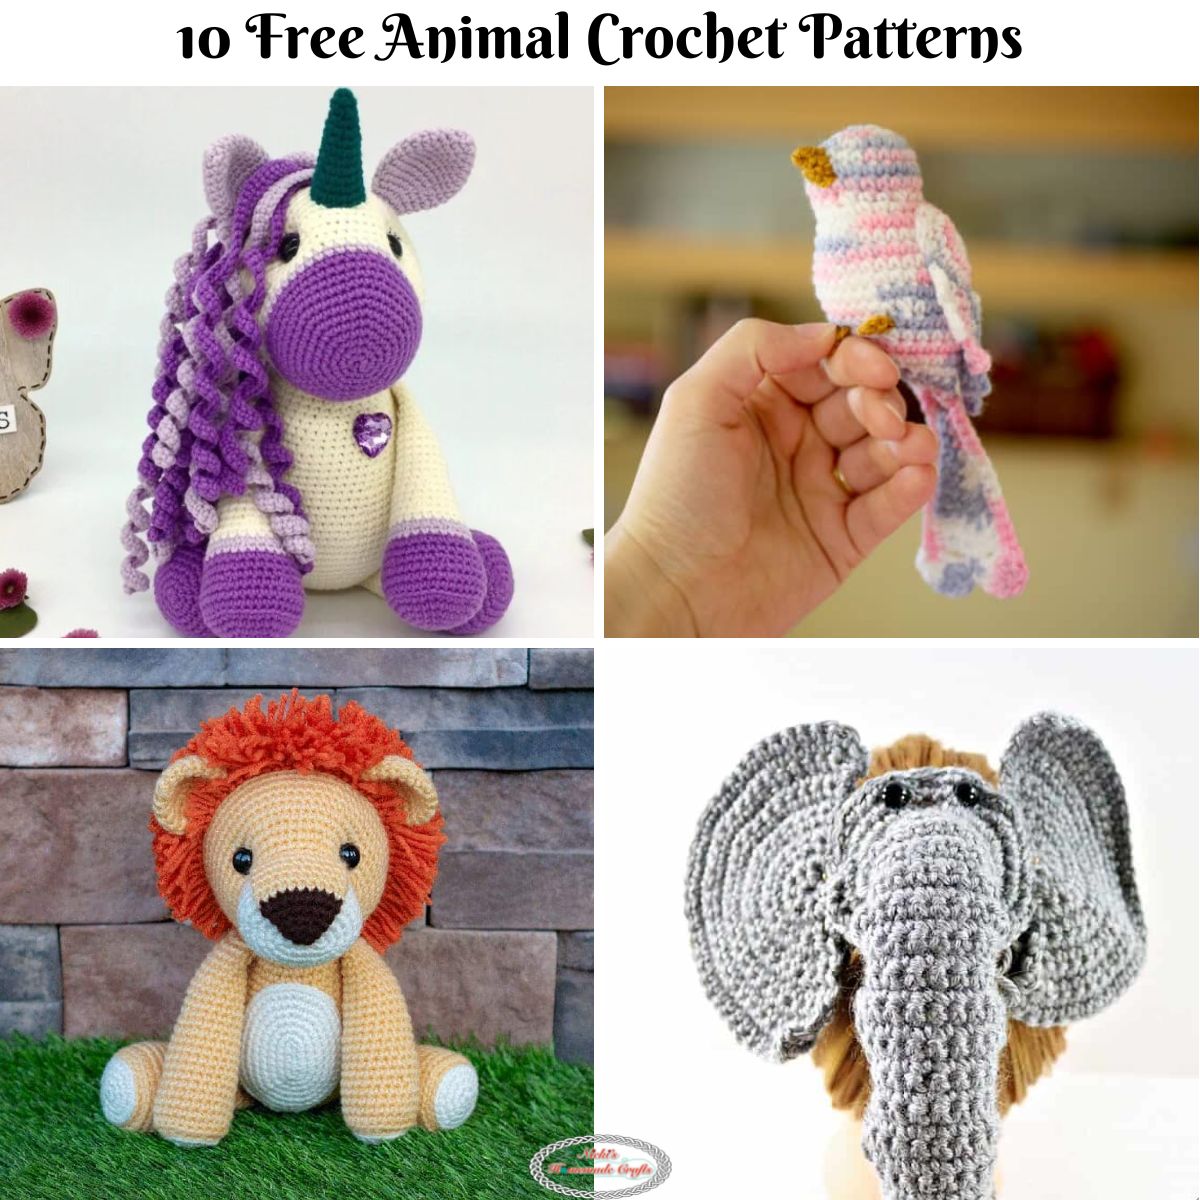 Dress Up Animal Free Crochet Patterns - Your Crochet